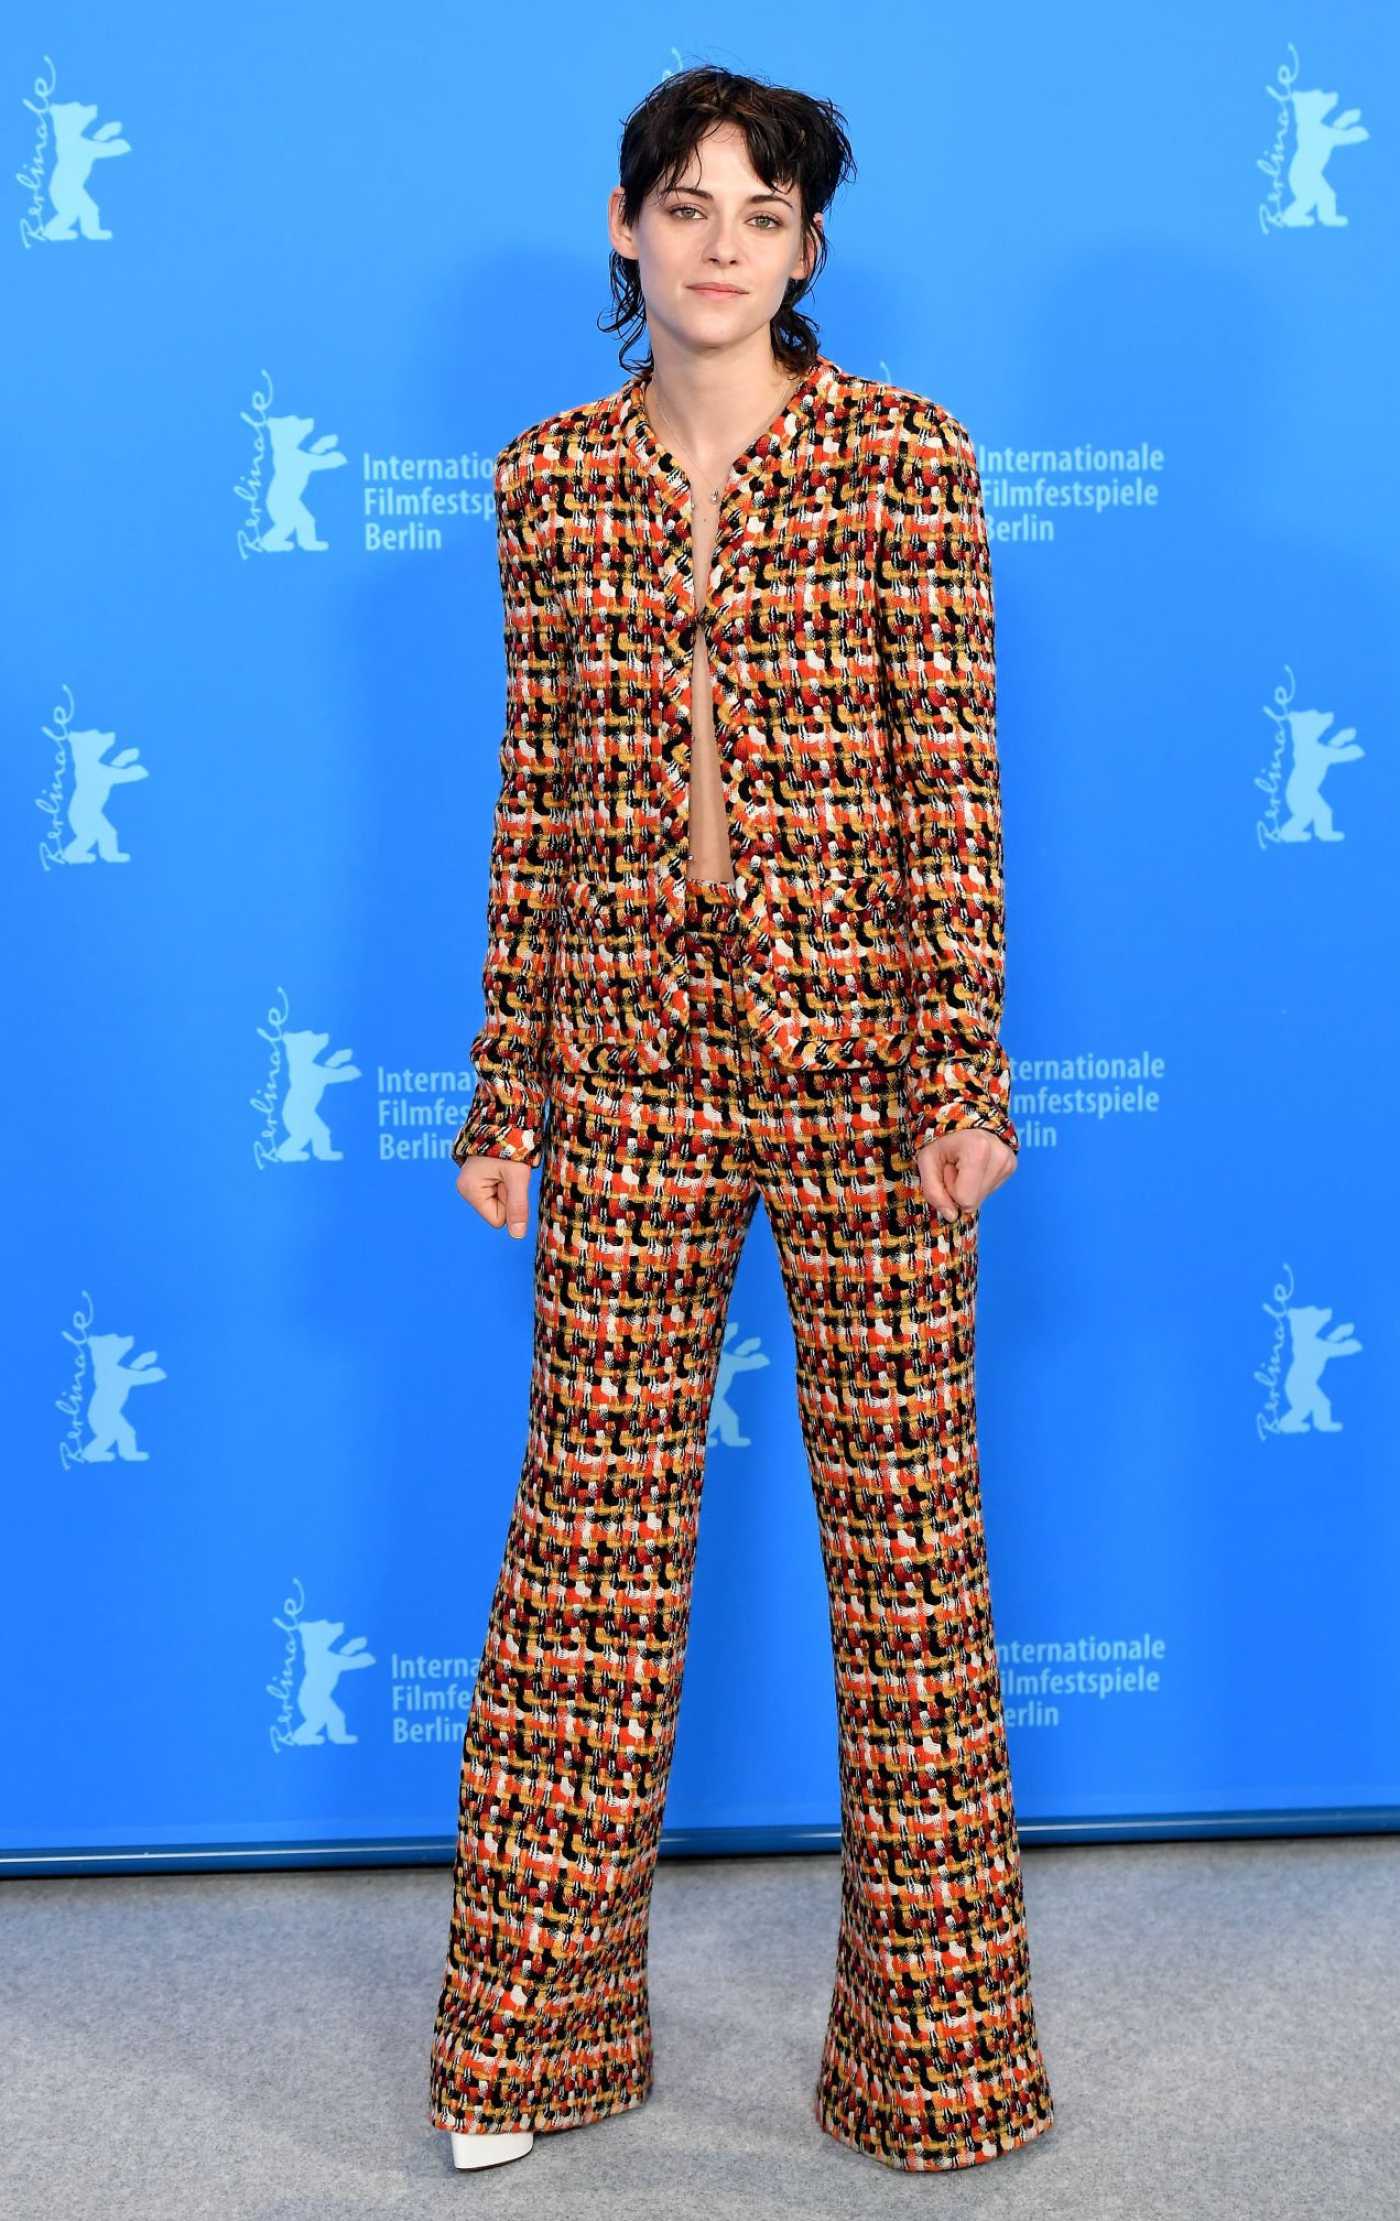 Kristen Stewart Attends the International Jury Photocall During the 73rd Berlinale International Film Festival in Berlin 02/16/2023